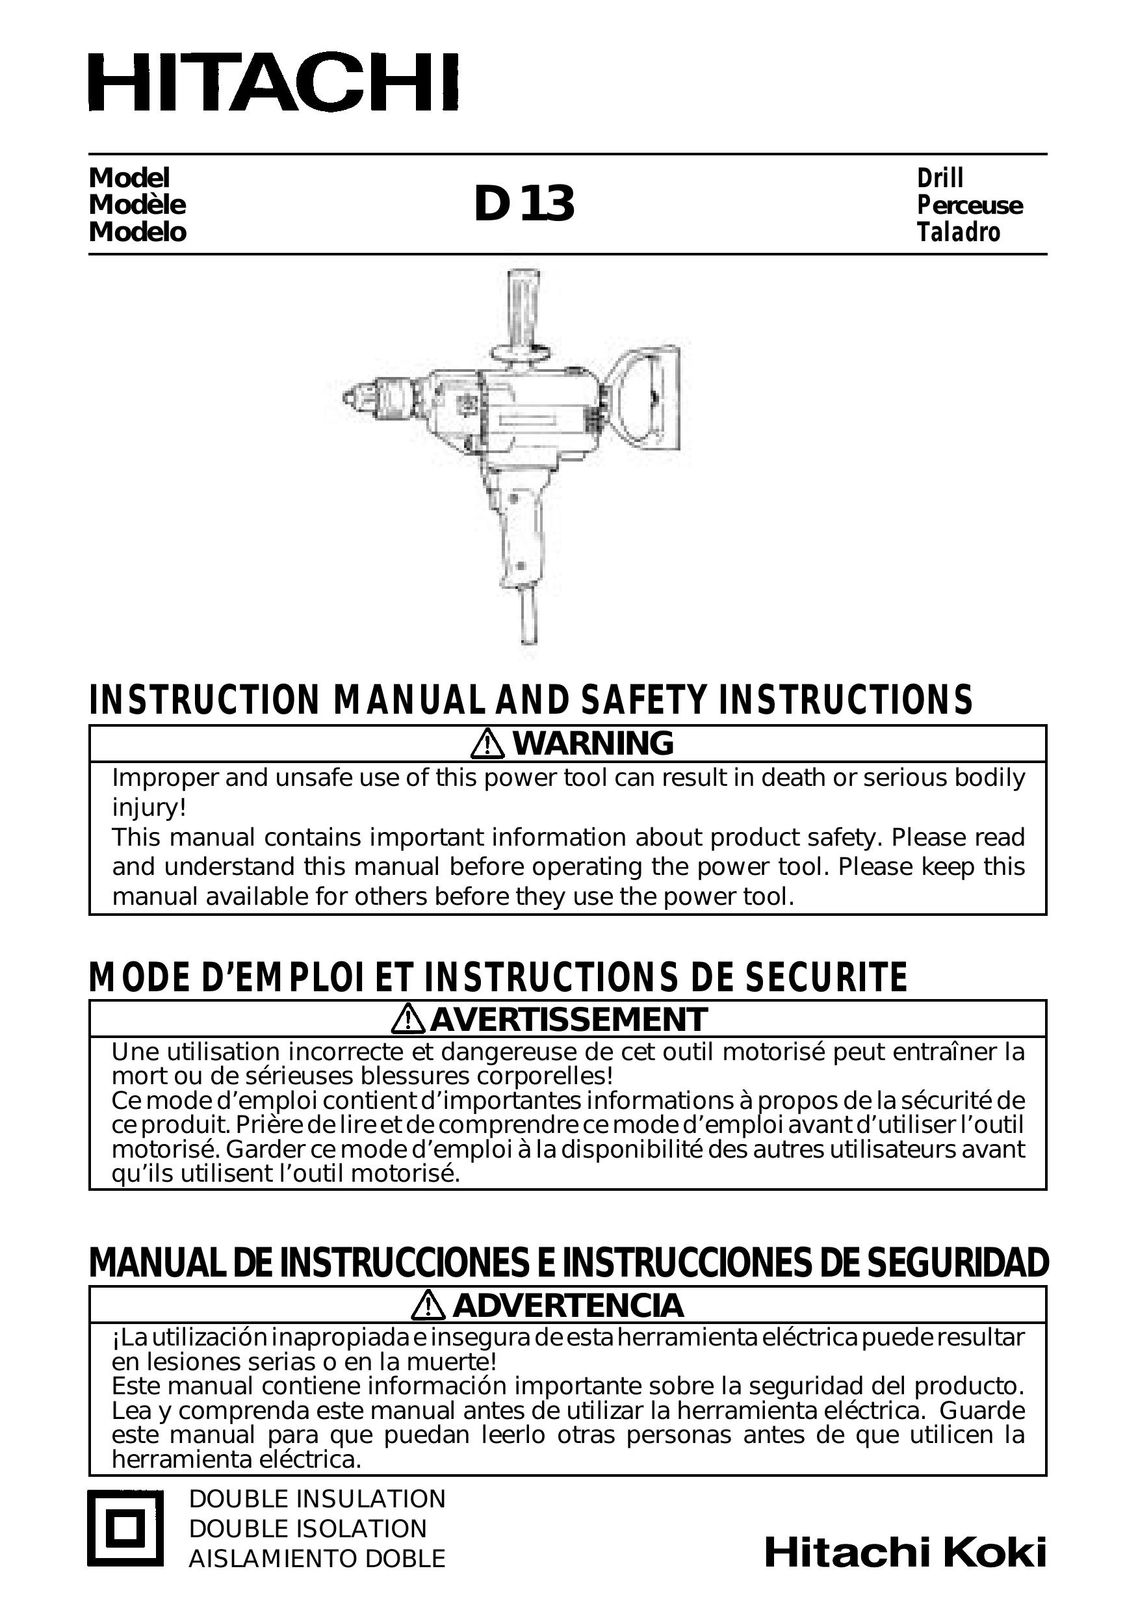 Hitachi D13 Cordless Drill User Manual